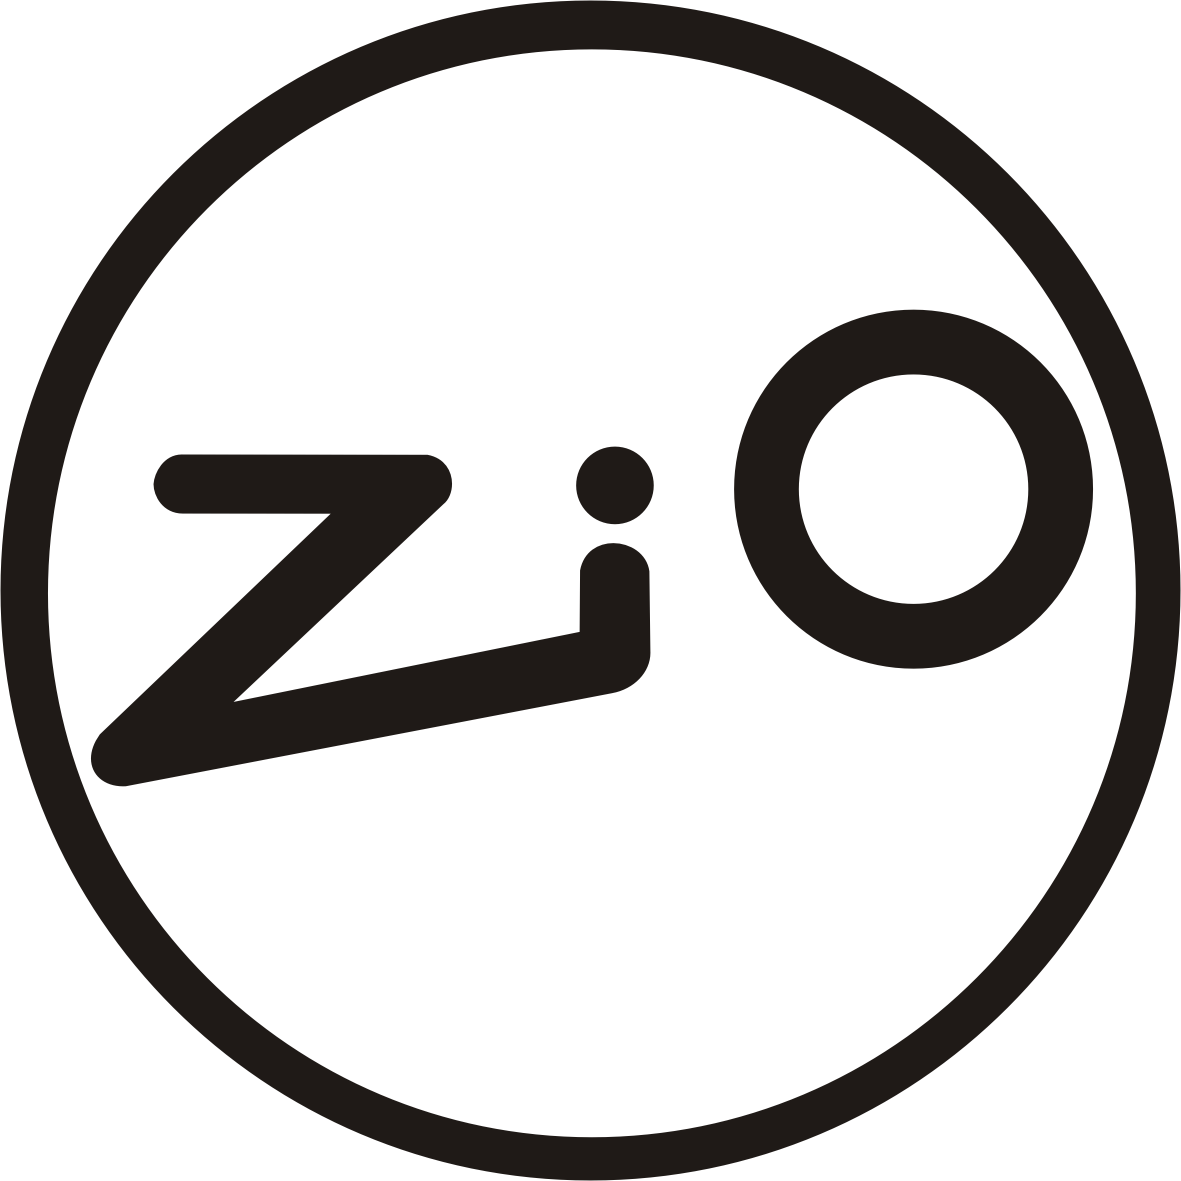 logo-ziocnc-2015